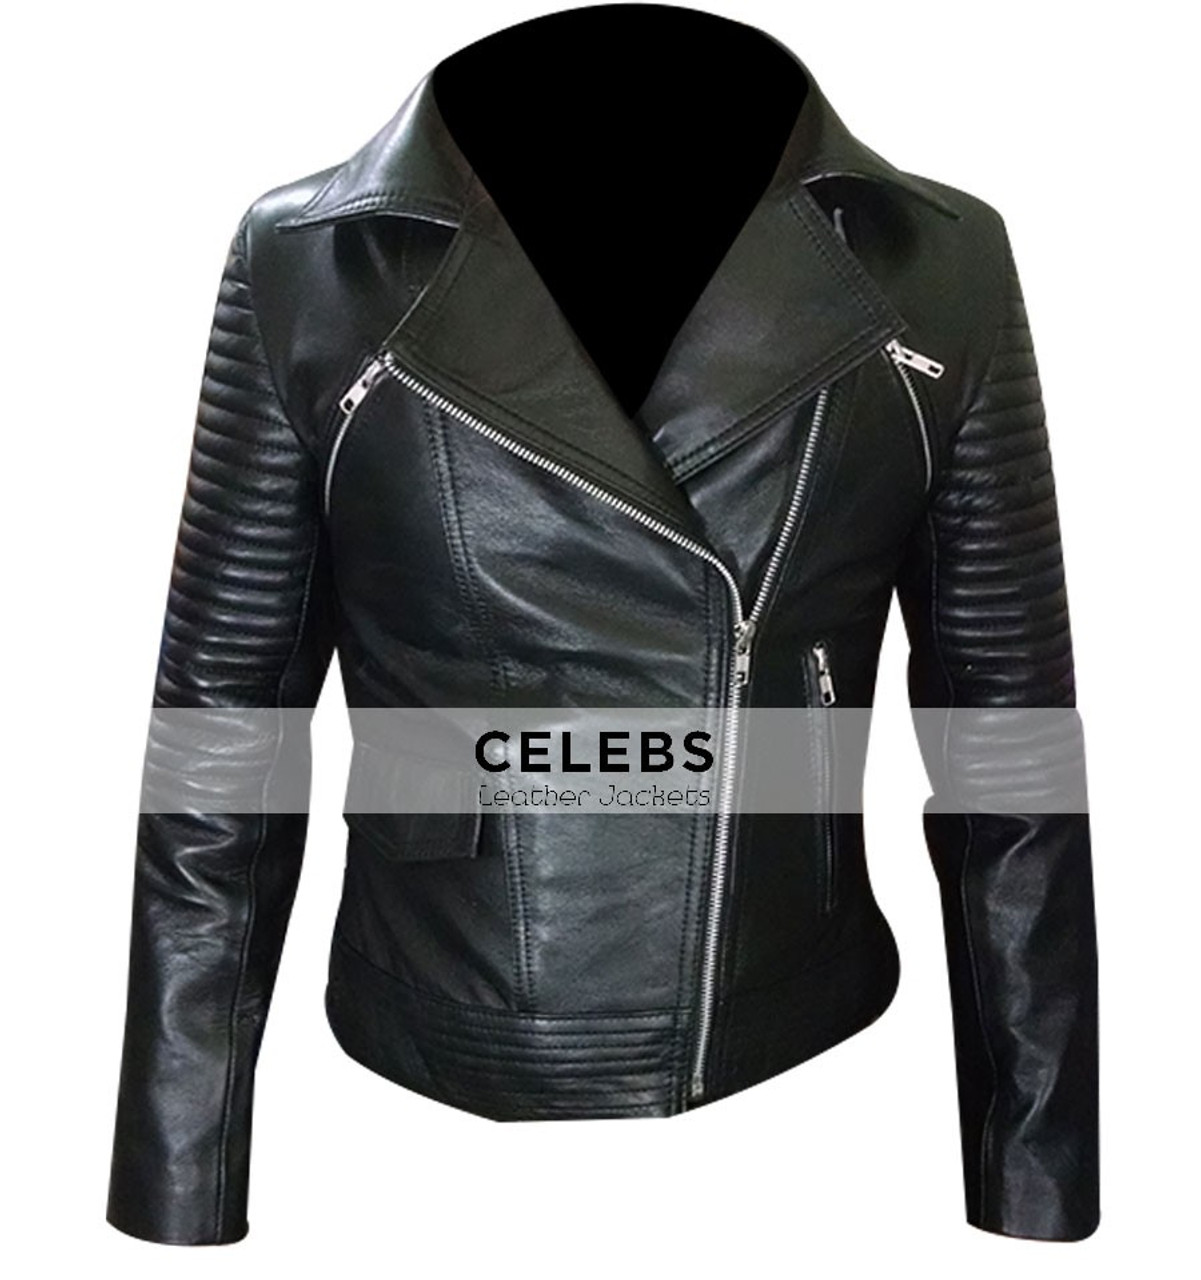 Gal Gadot (Gisele Harabo) Fast And Furious 6 Leather Jacket